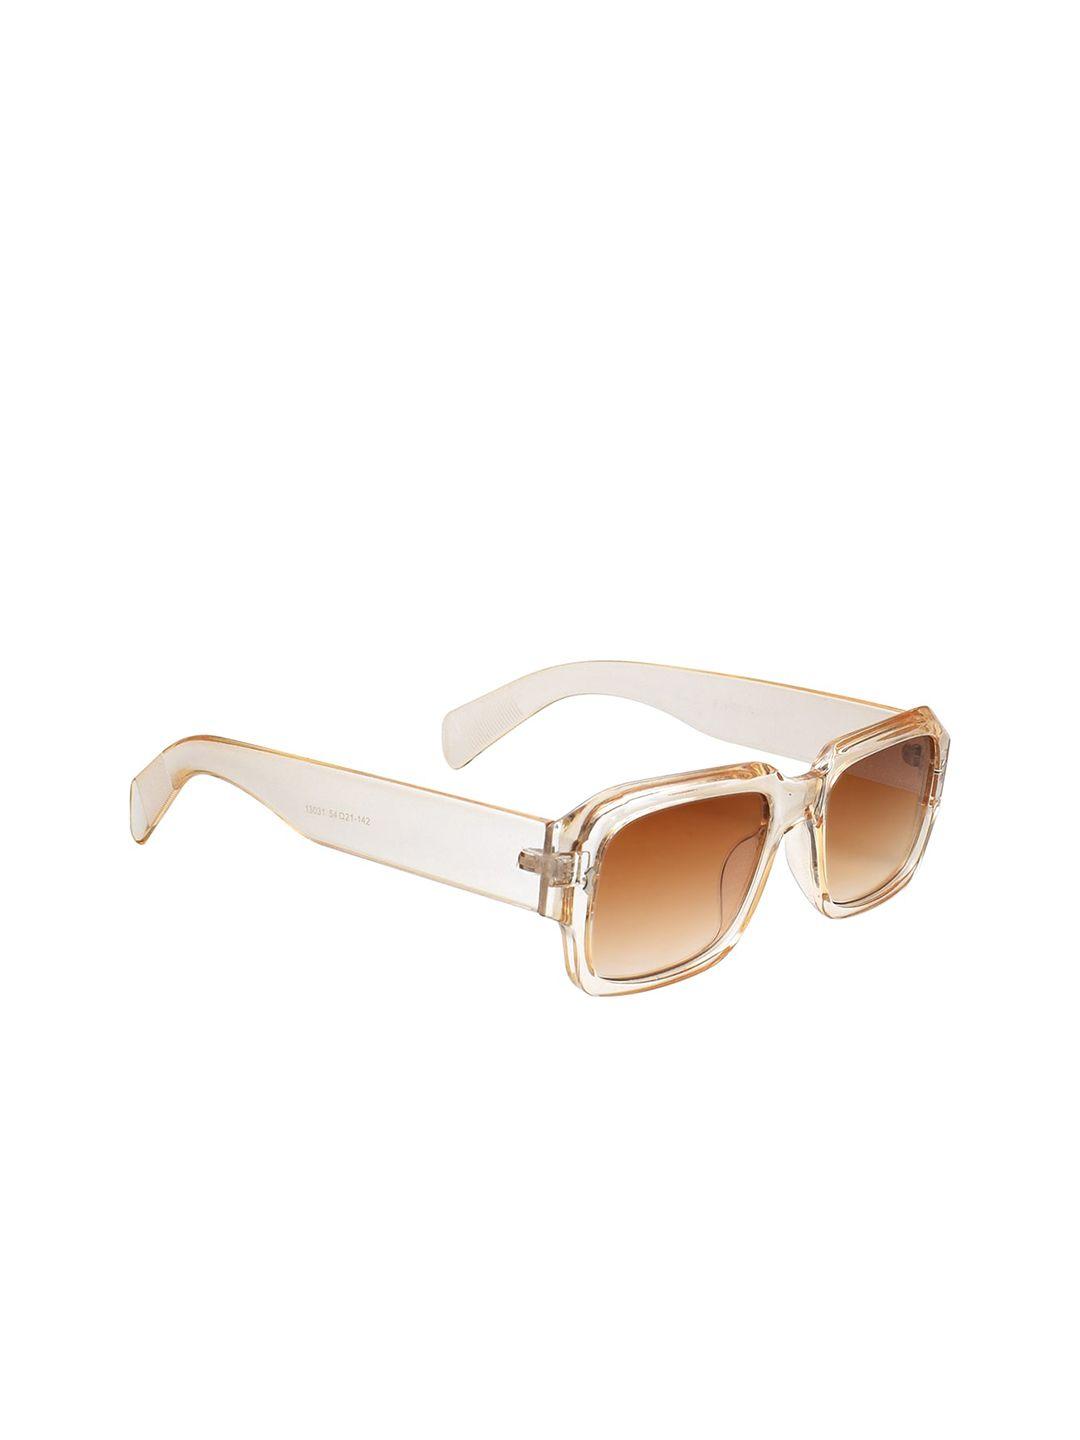 peter jones eyewear unisex square sunglasses with uv protected lens